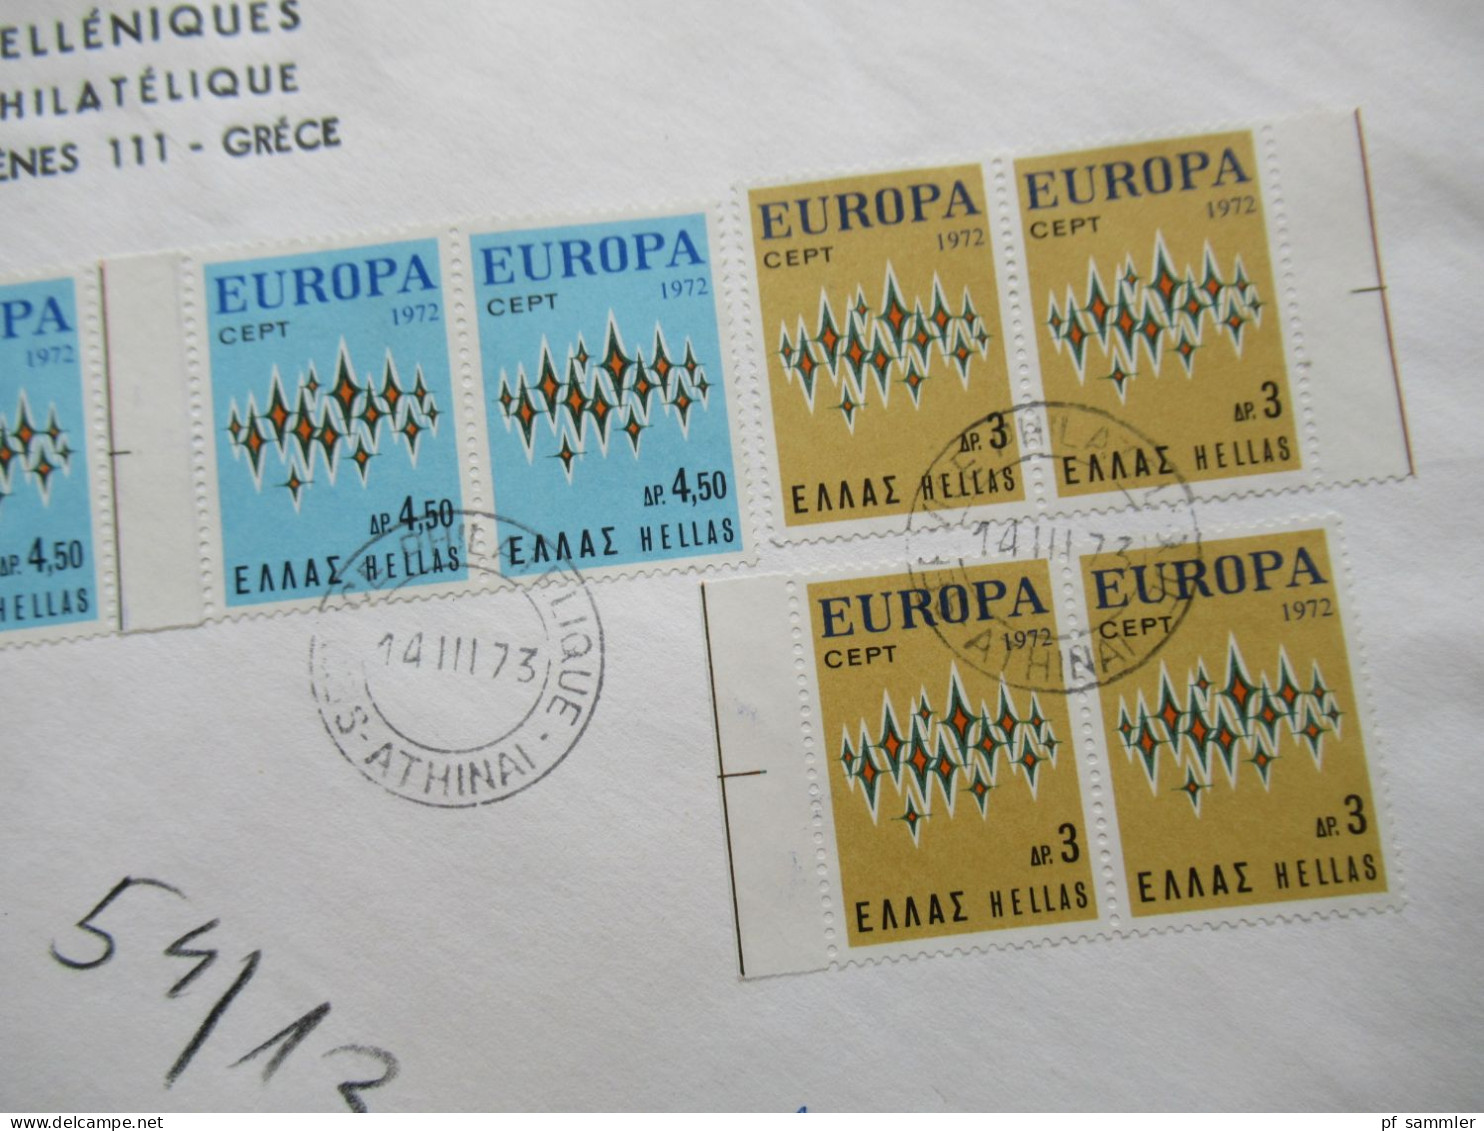 Griechenland Europa Cept 1972 Einschreiben Athinai Postes Helleniques Service Philatelique Nach Bamberg Gesendet - Storia Postale